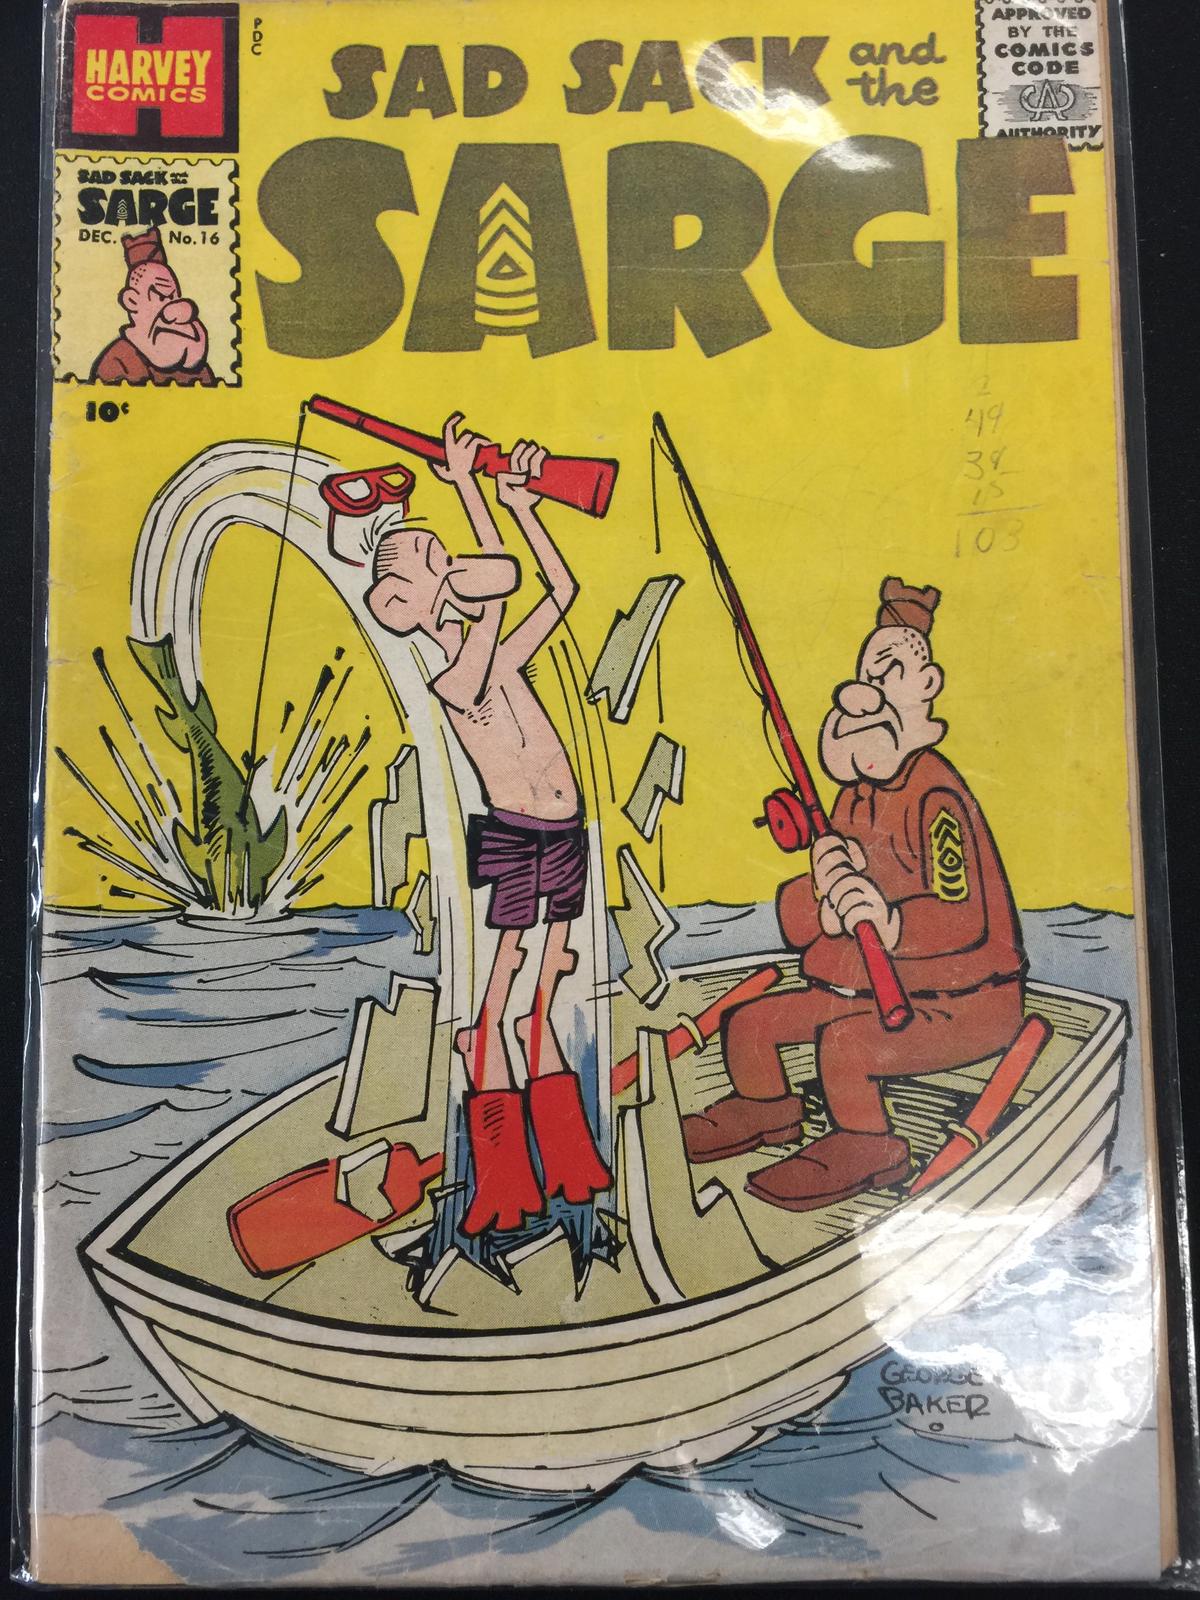 Sad Sack and the Sarge #16-Harvey Comic Book